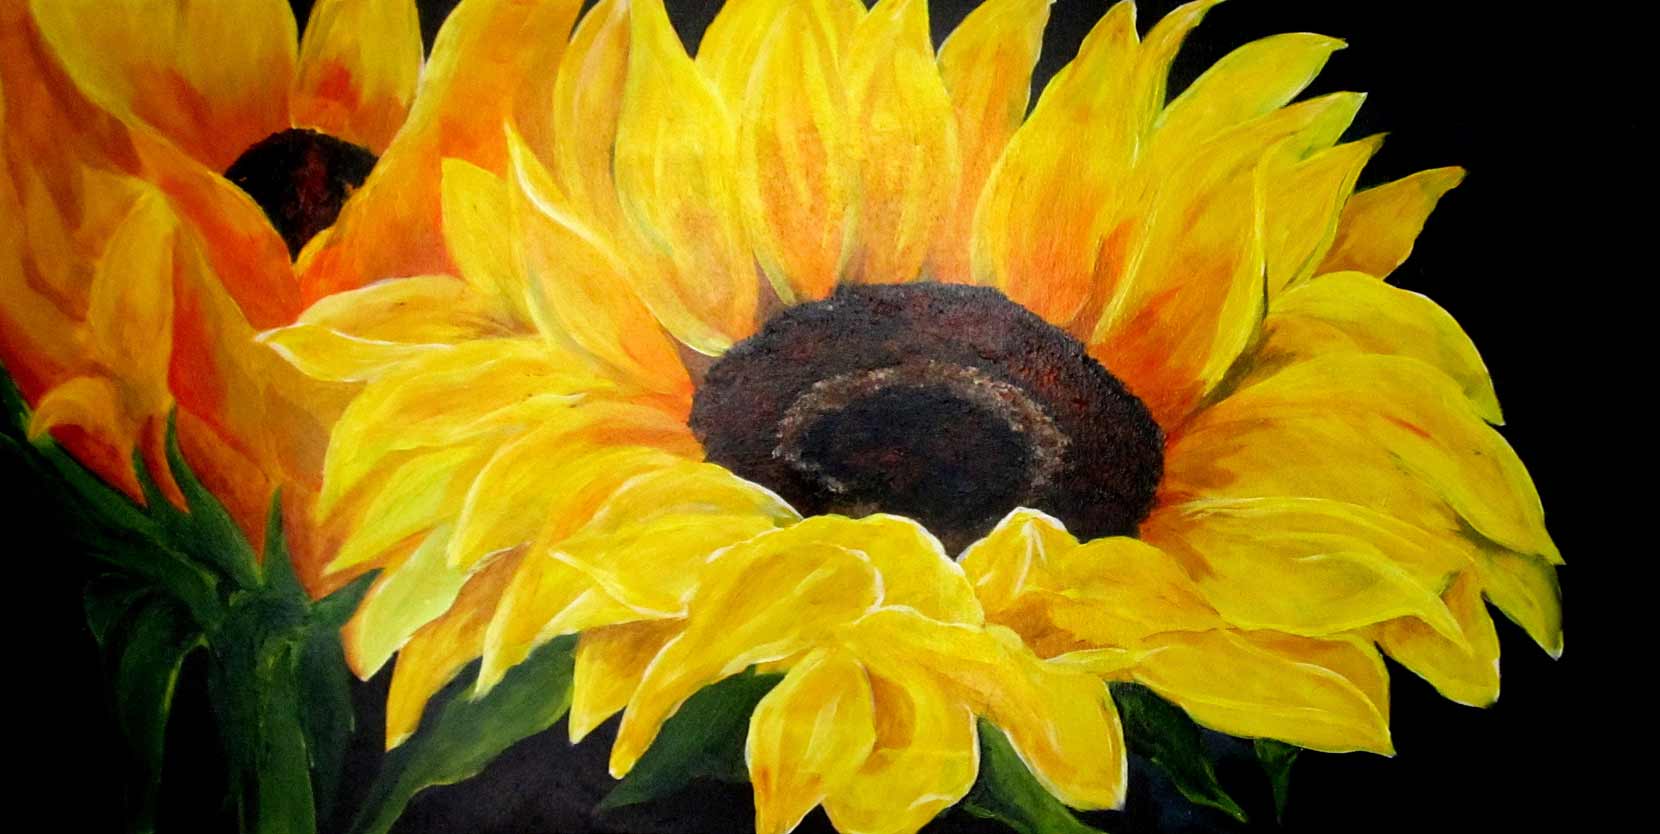 "Sunflower", 48x24